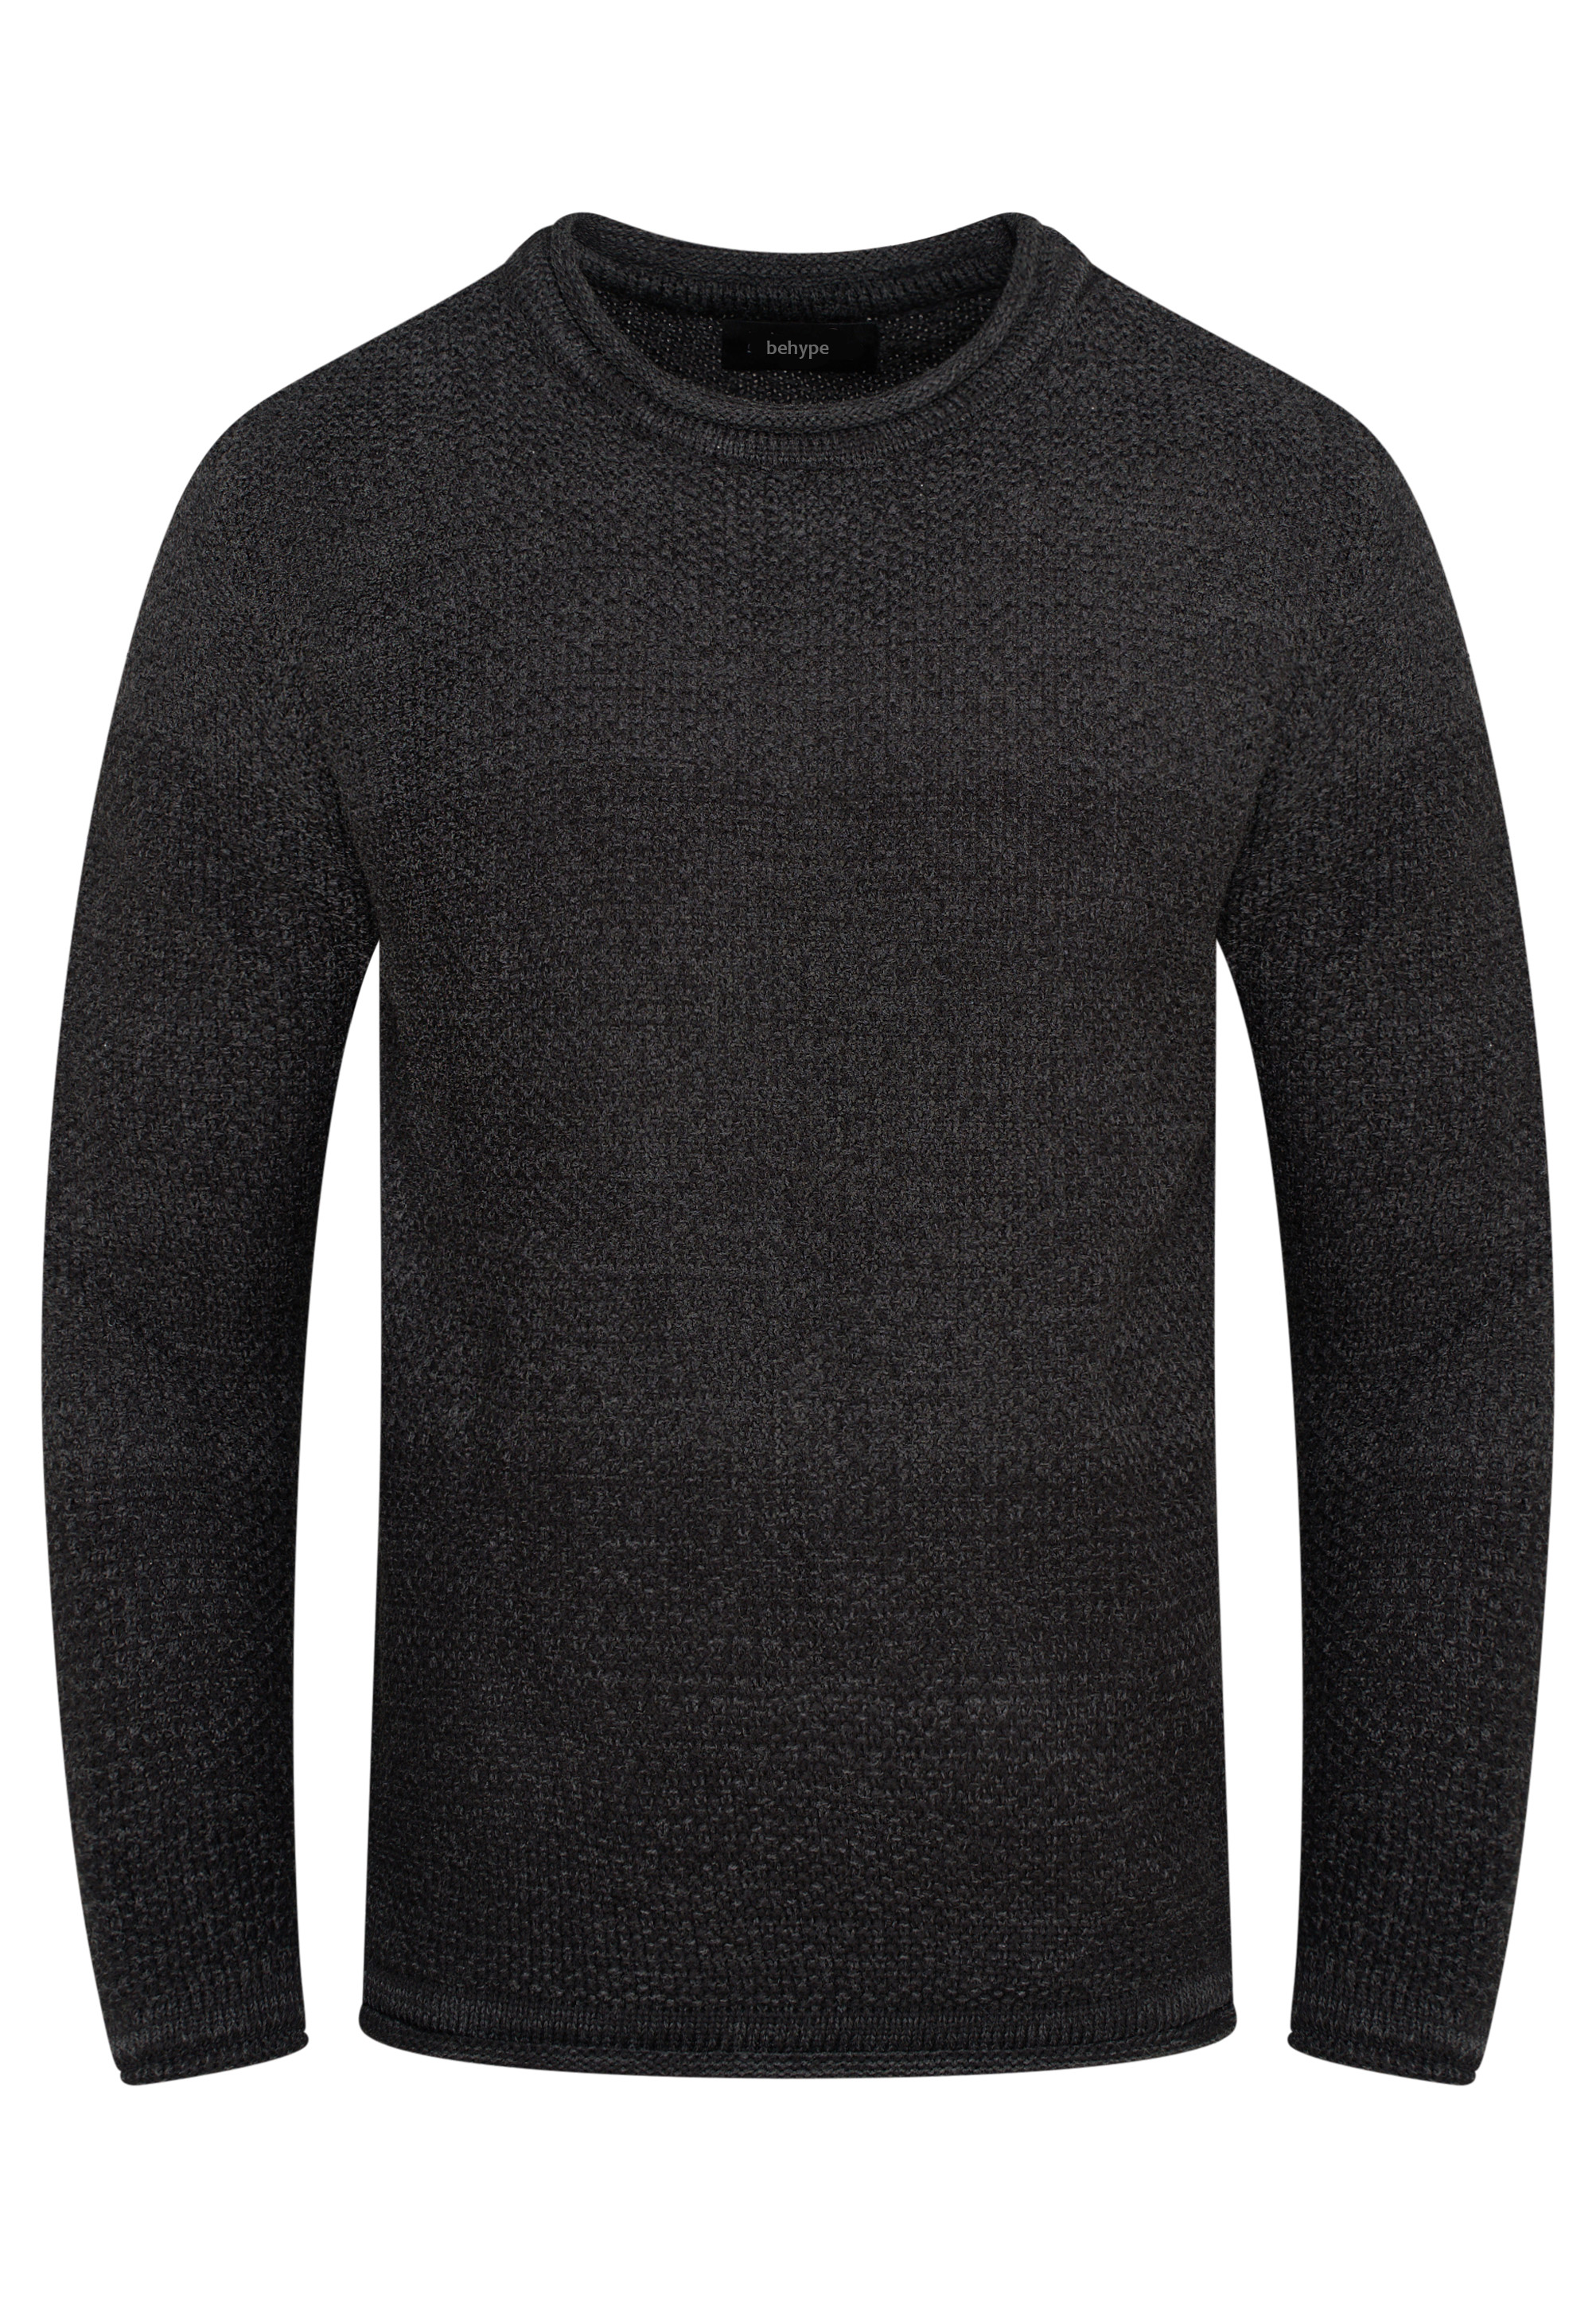 Пуловер behype MKBlone, темно серый